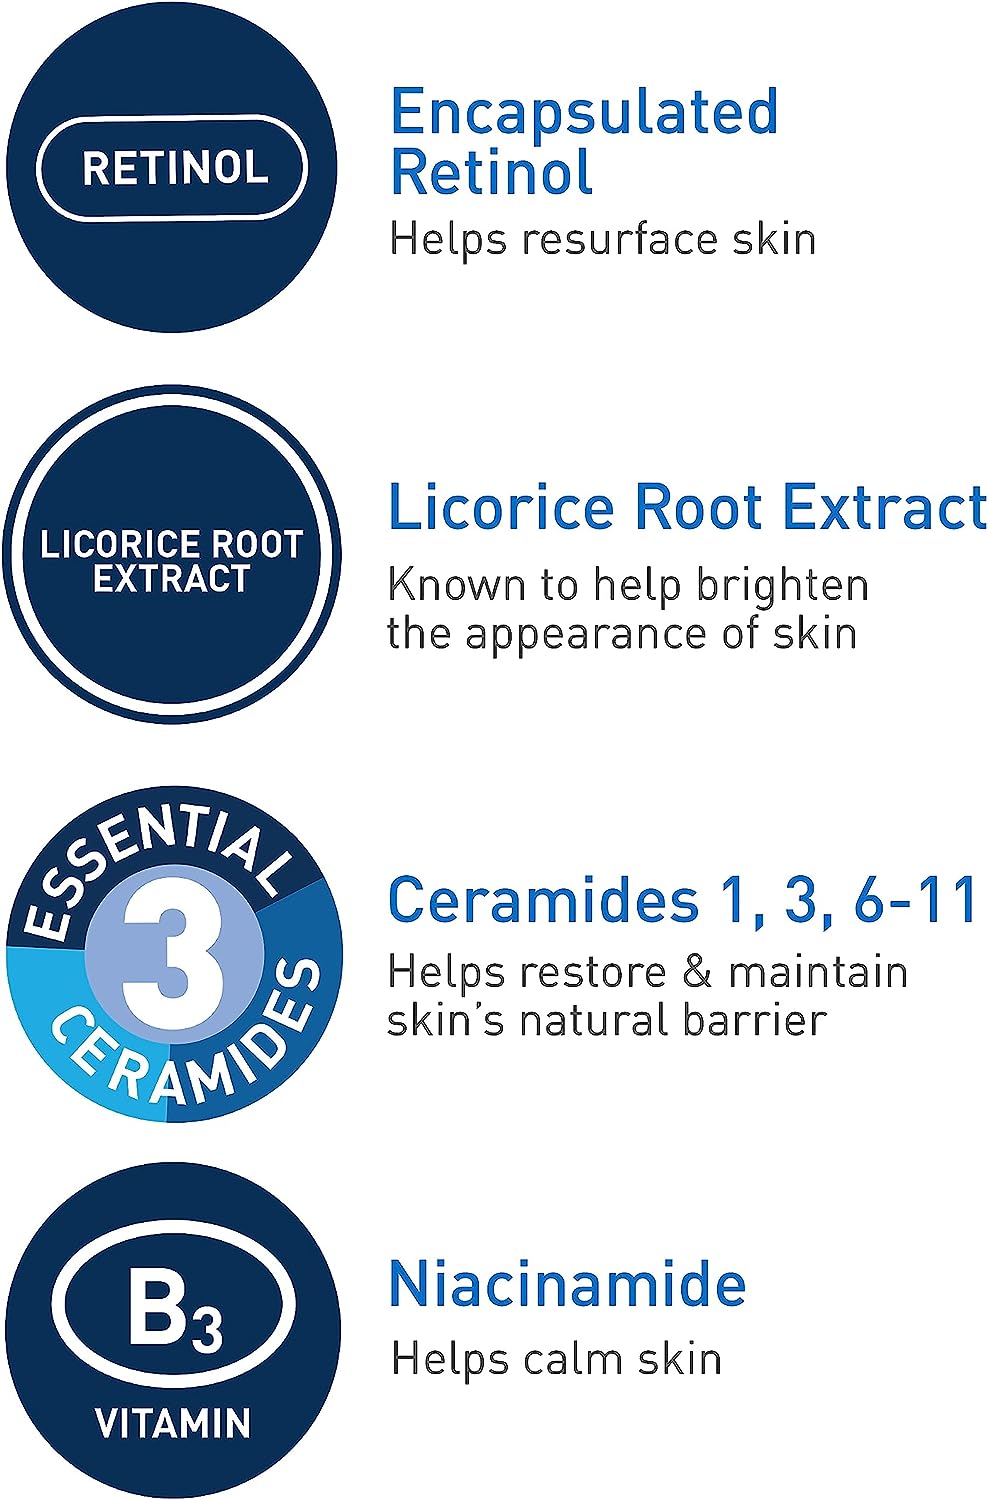 CeraVe Retinol Serum for Post-Acne Marks and Skin Texture | Pore Refining, Resurfacing, Brightening Facial Serum with Retinol | 1 Oz